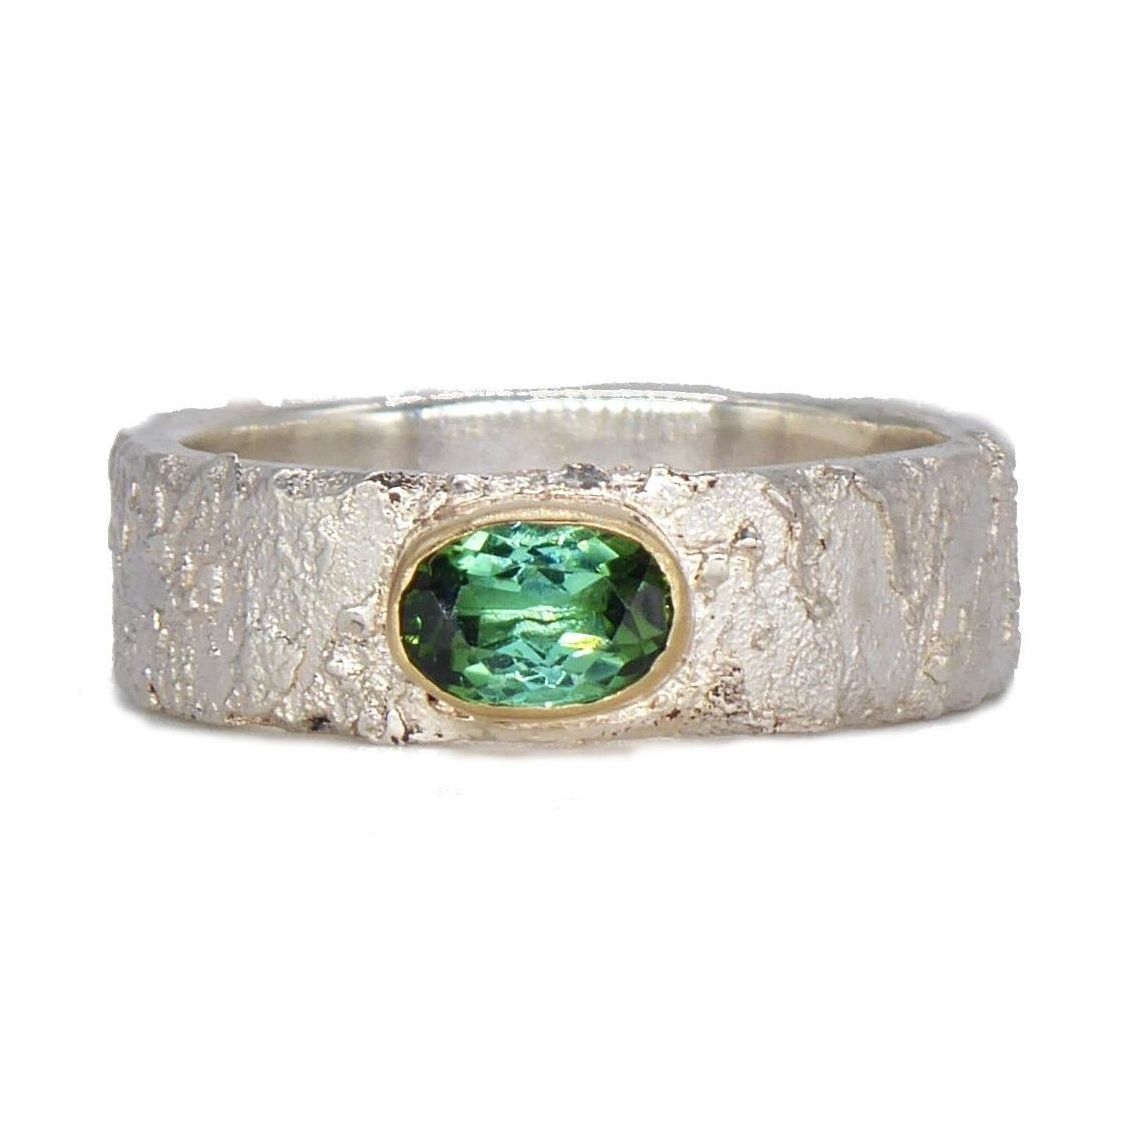 Green tourmaline Rivda silver abd gold ring